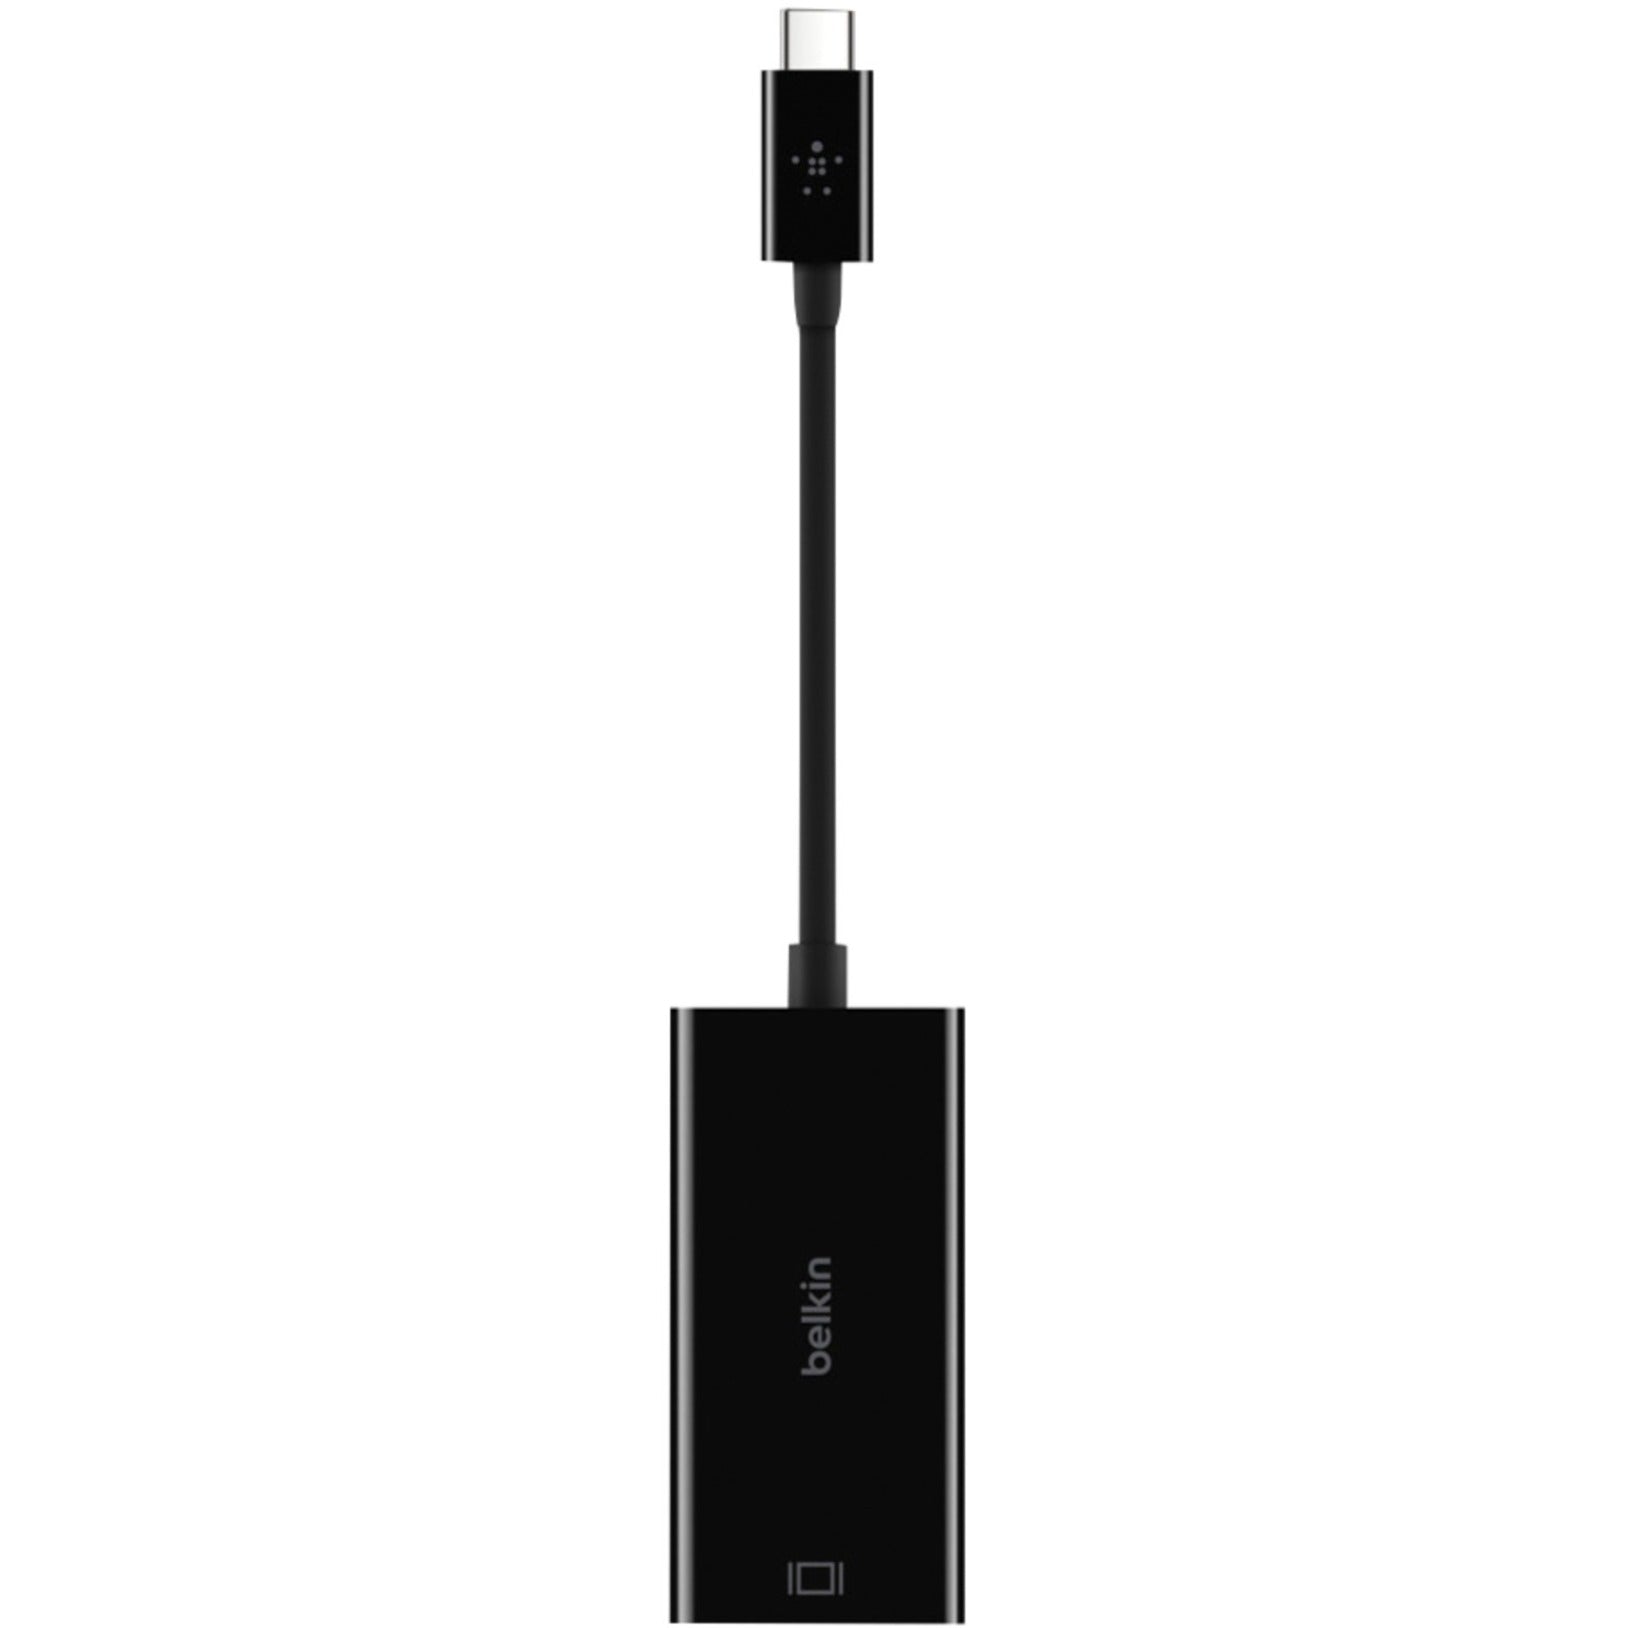 Belkin B2B144-BLK USB-C to HDMI Adapter (For Business / Bag & Label), PC Platform Supported, External Form Factor